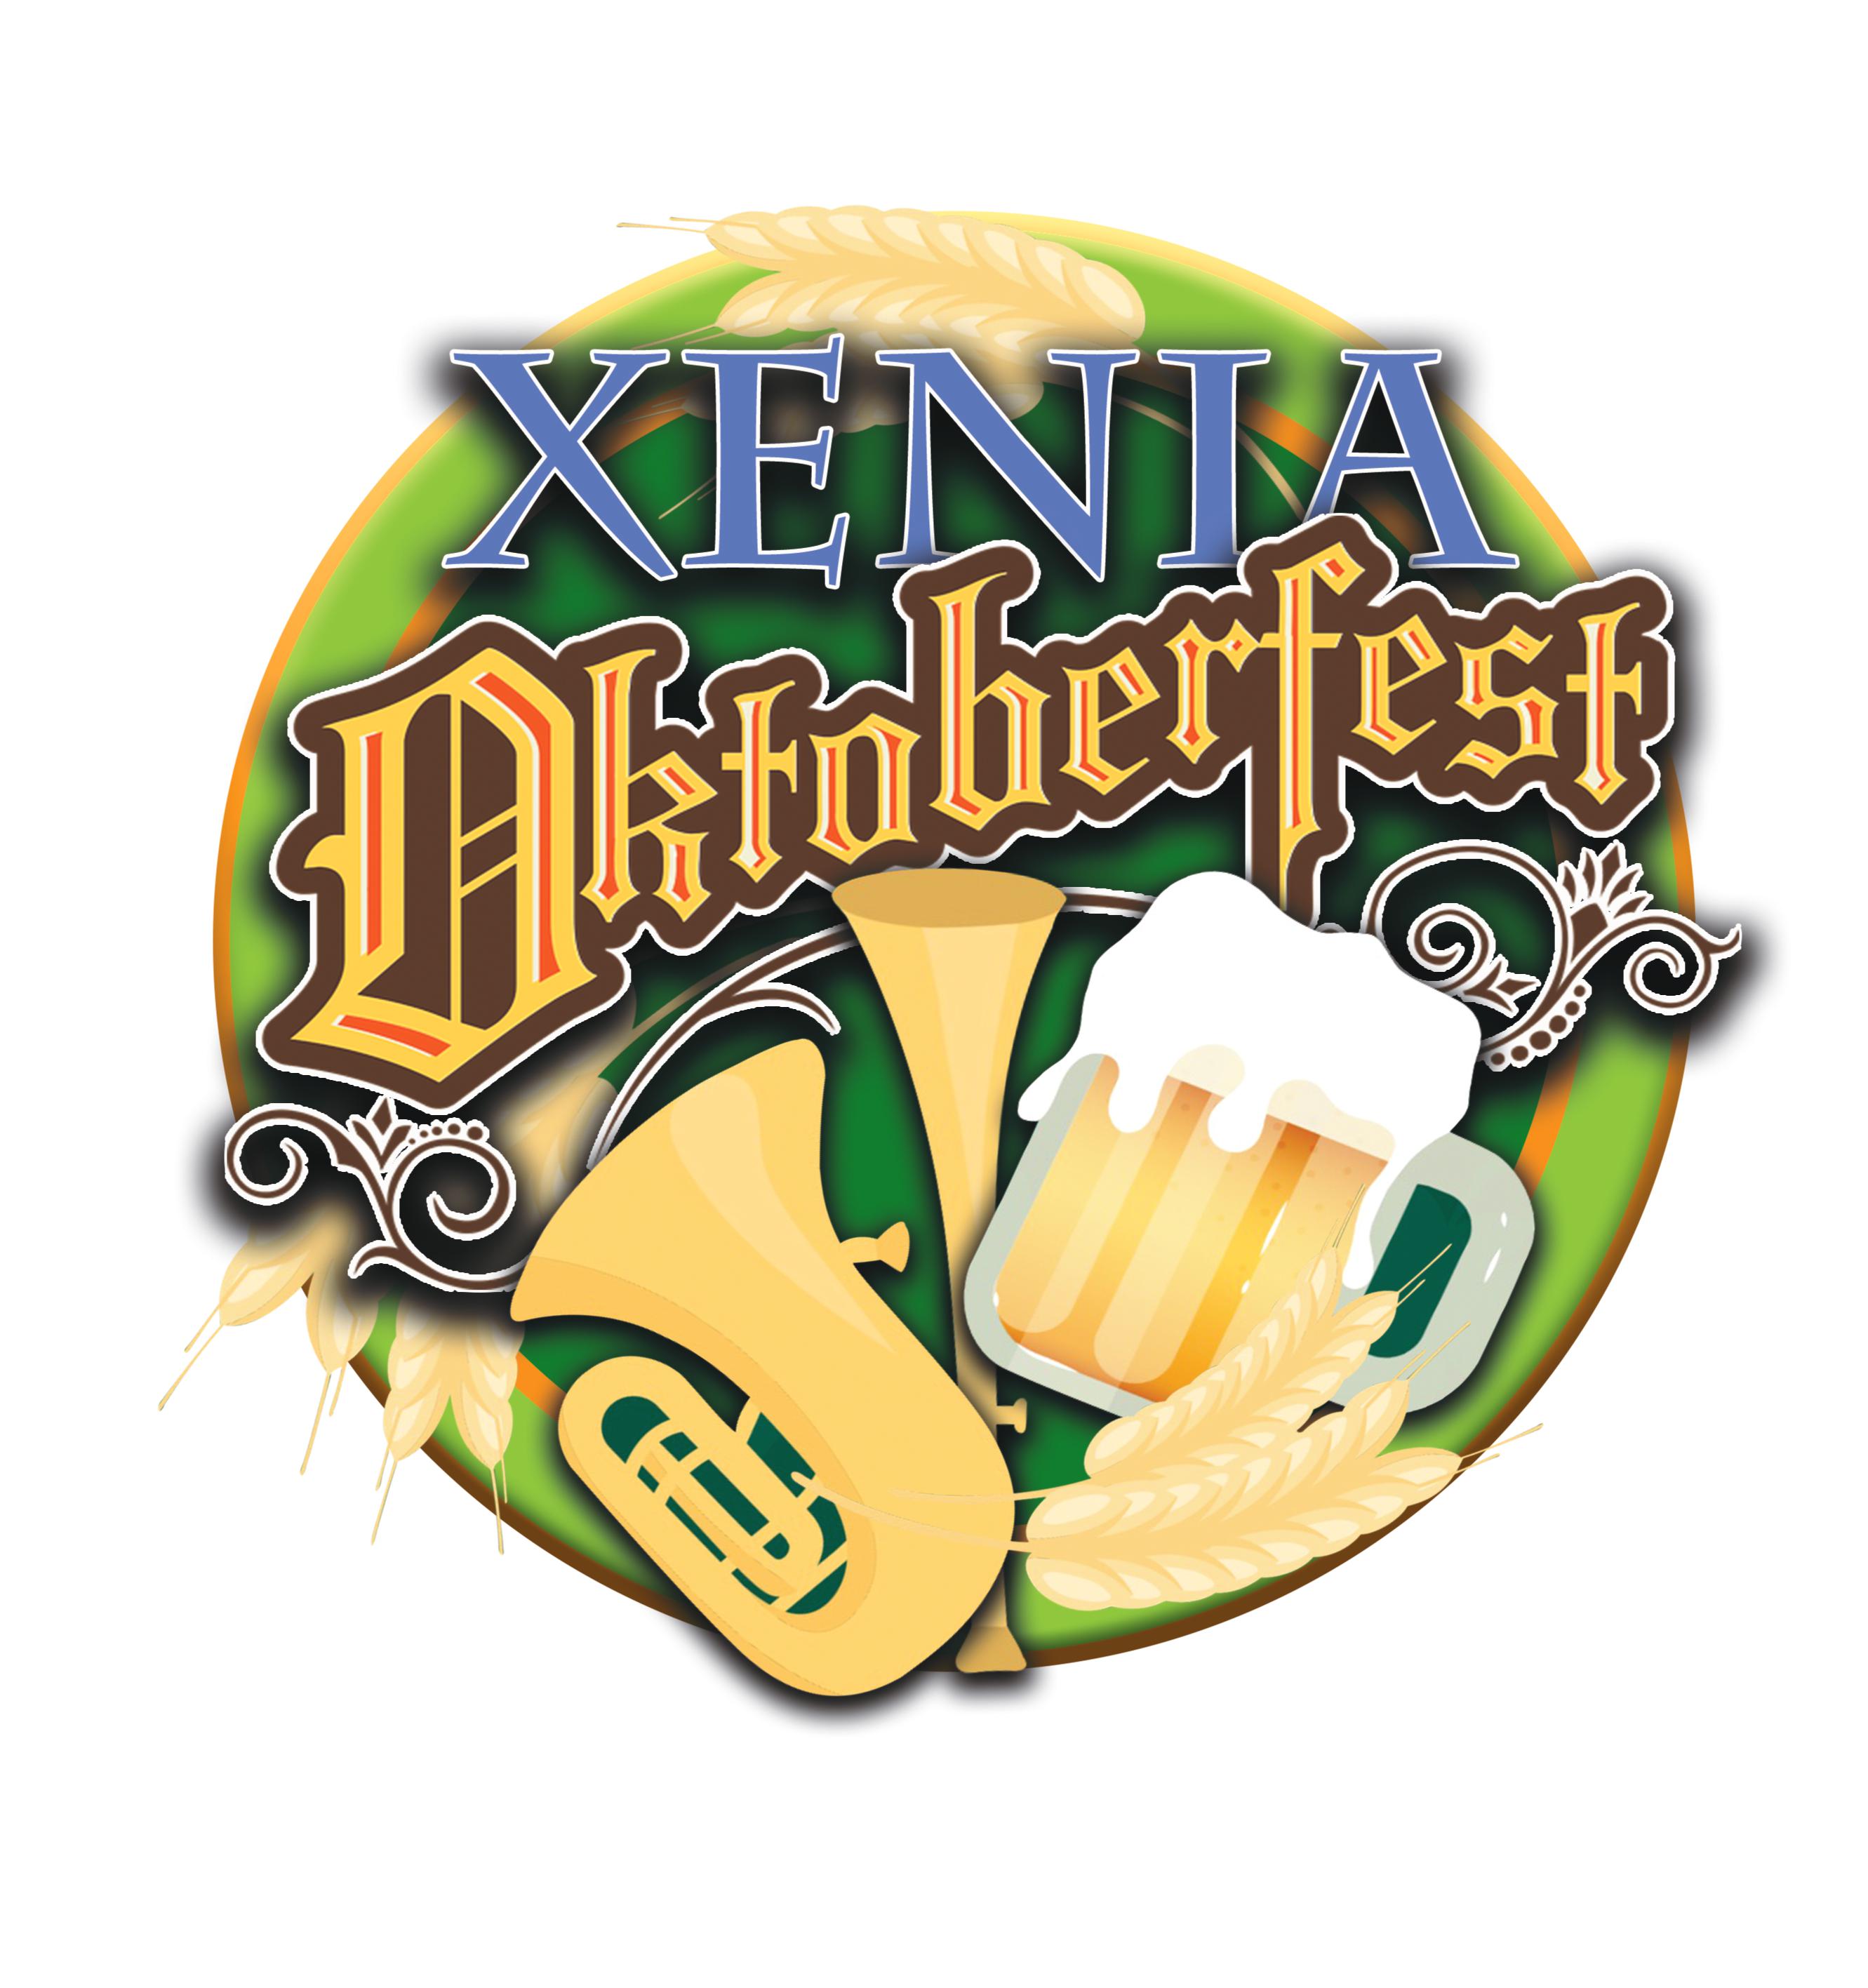 Xenia Community Festival Now Hosting Oktoberfest on October 9, 2021!